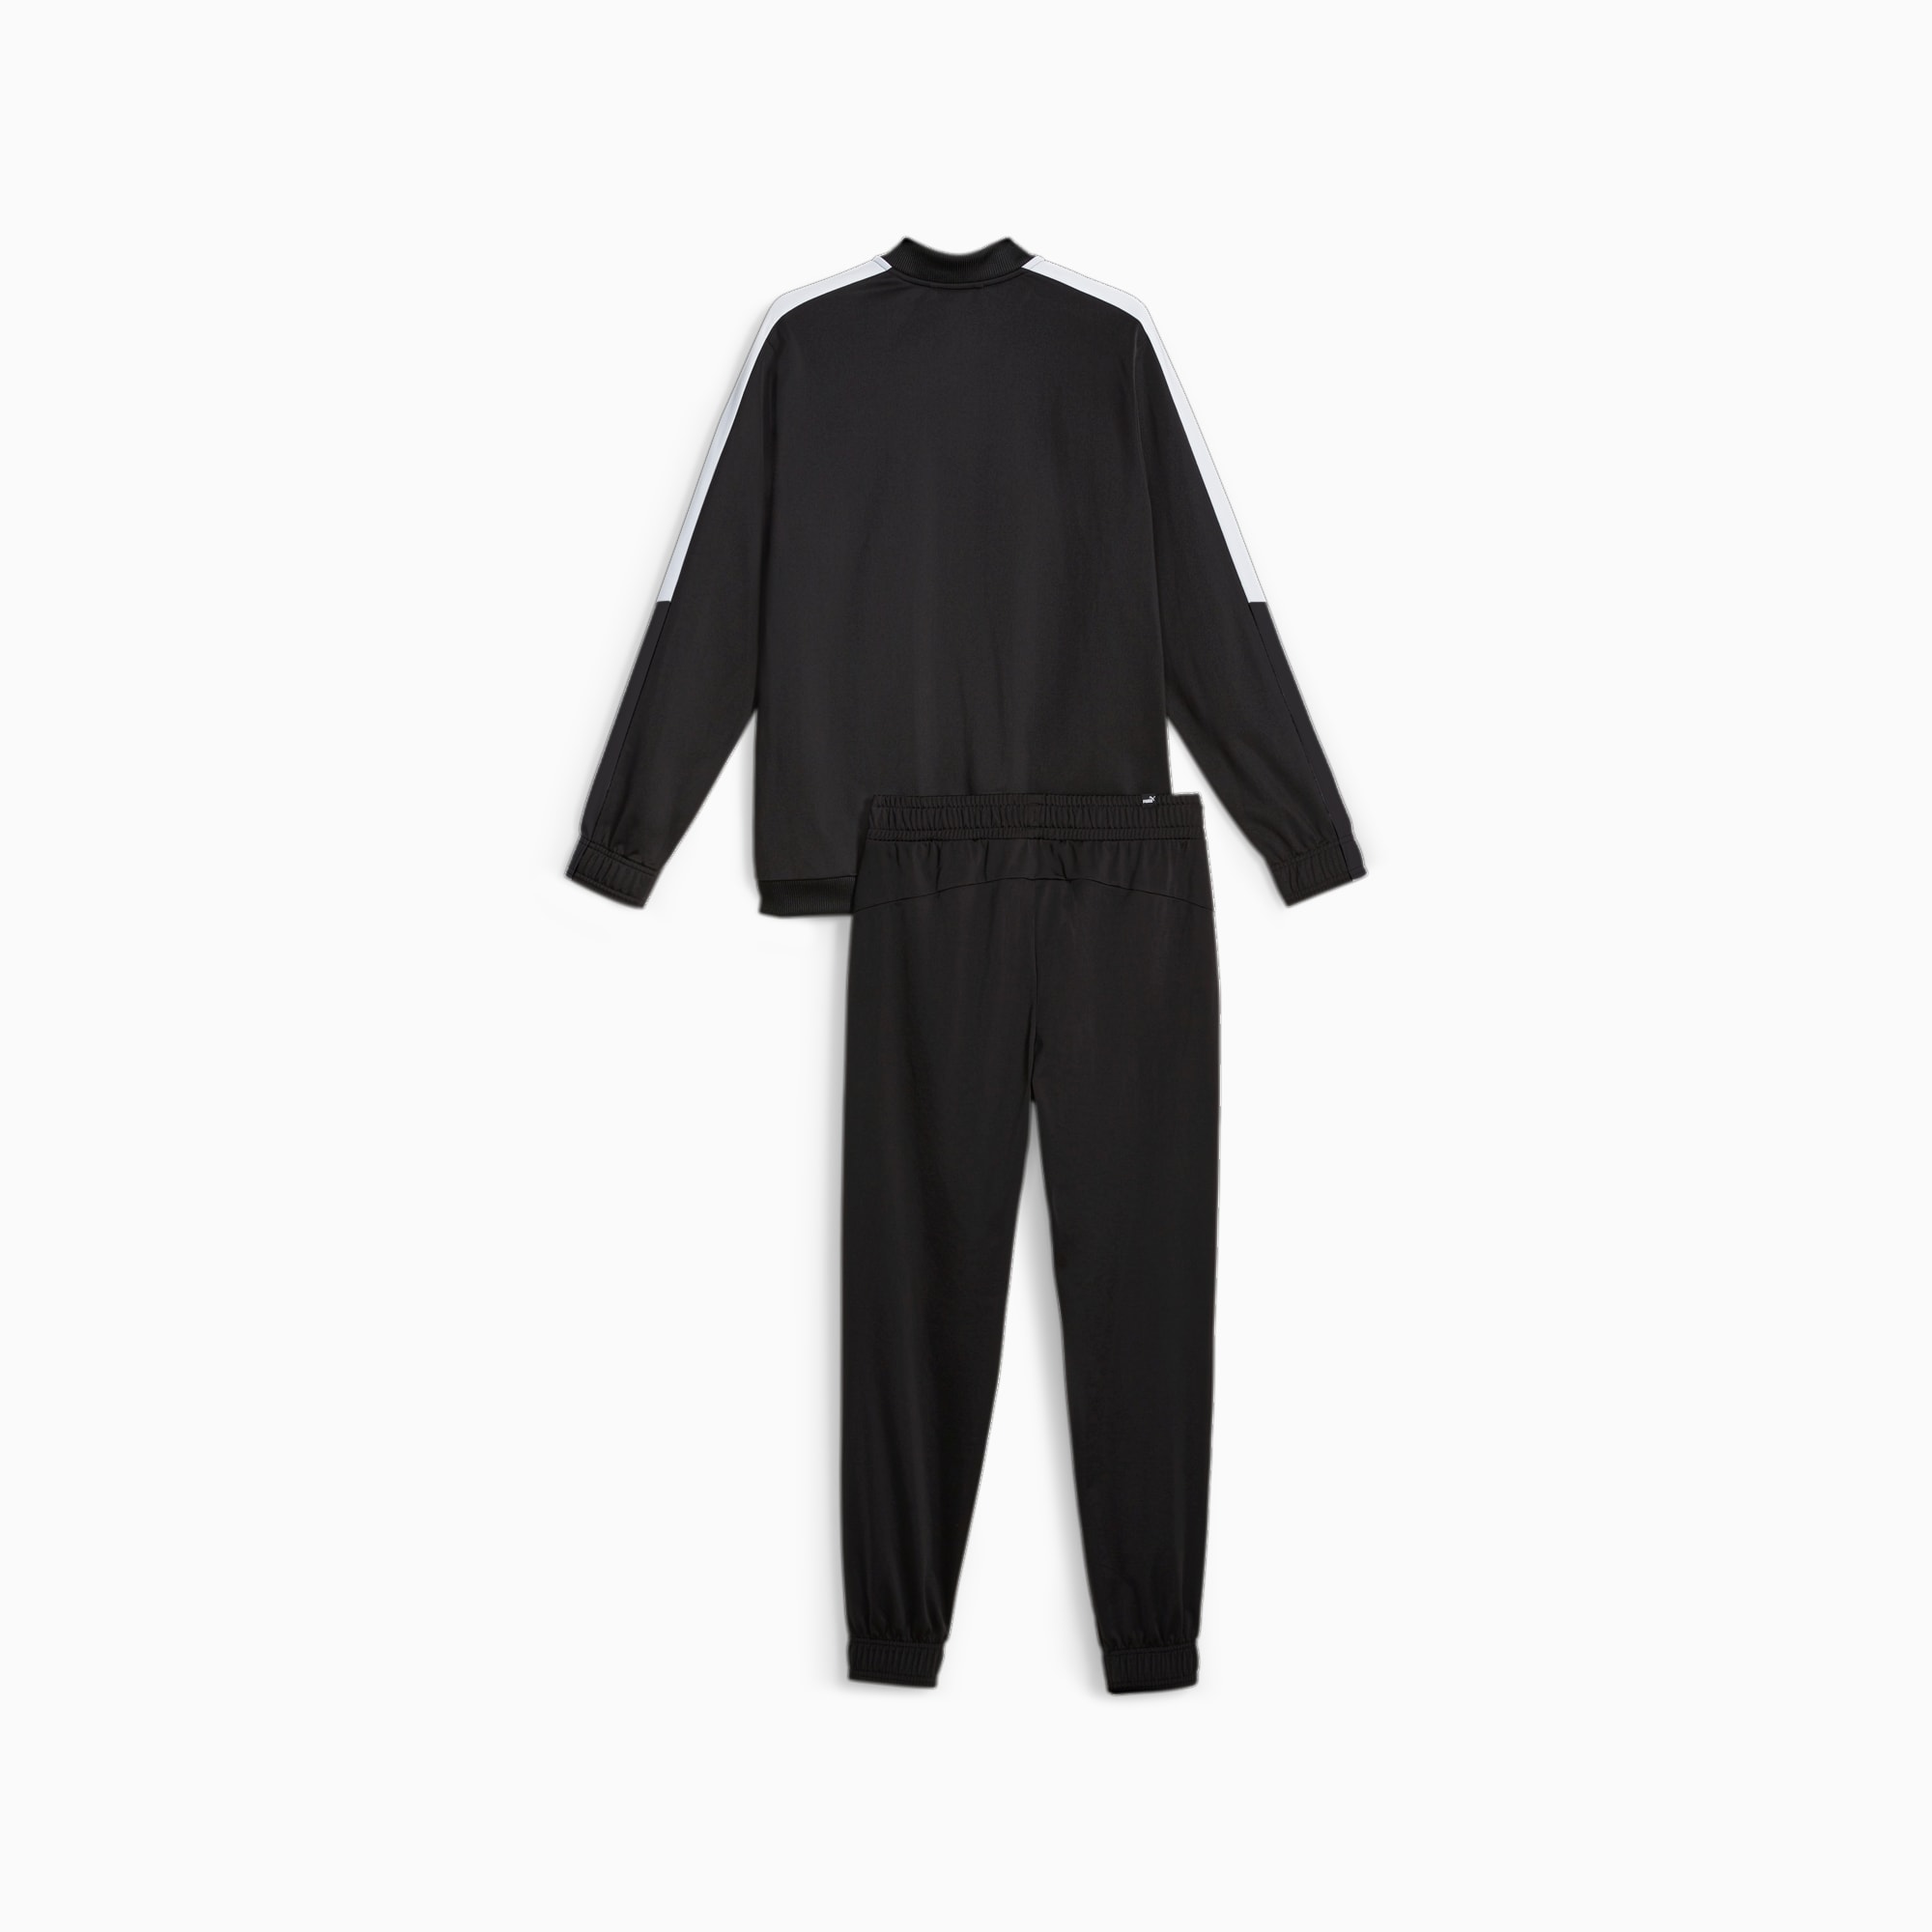 PUMA Men's Baseball Tricot Suit, Black, Size XS